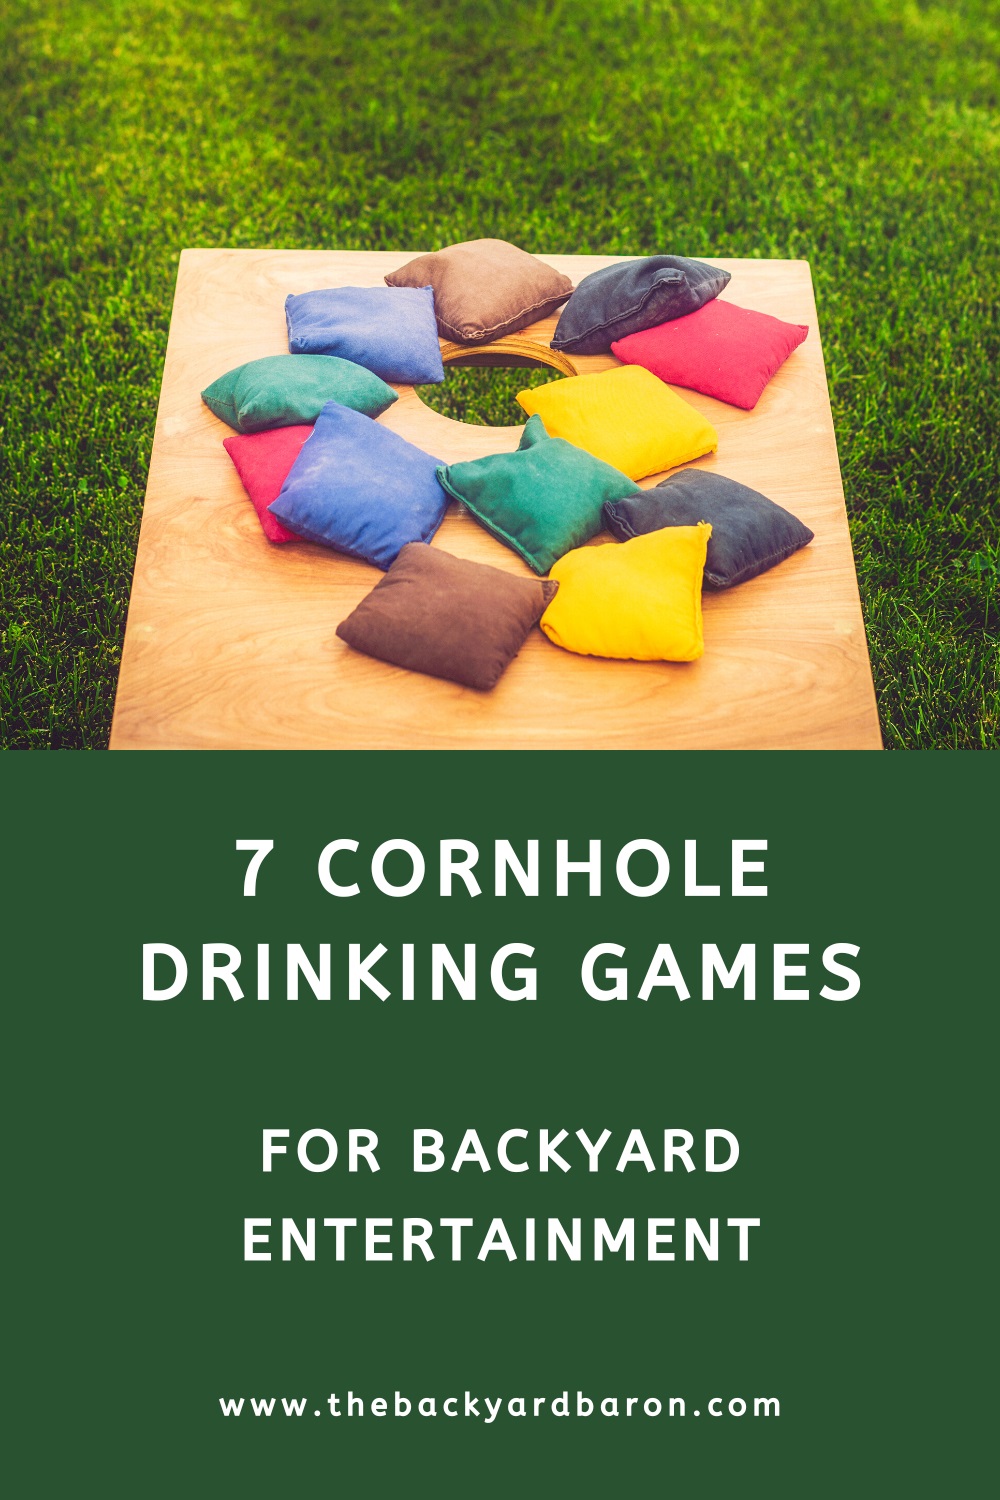 7 Cornhole drinking games for backyard entertainment